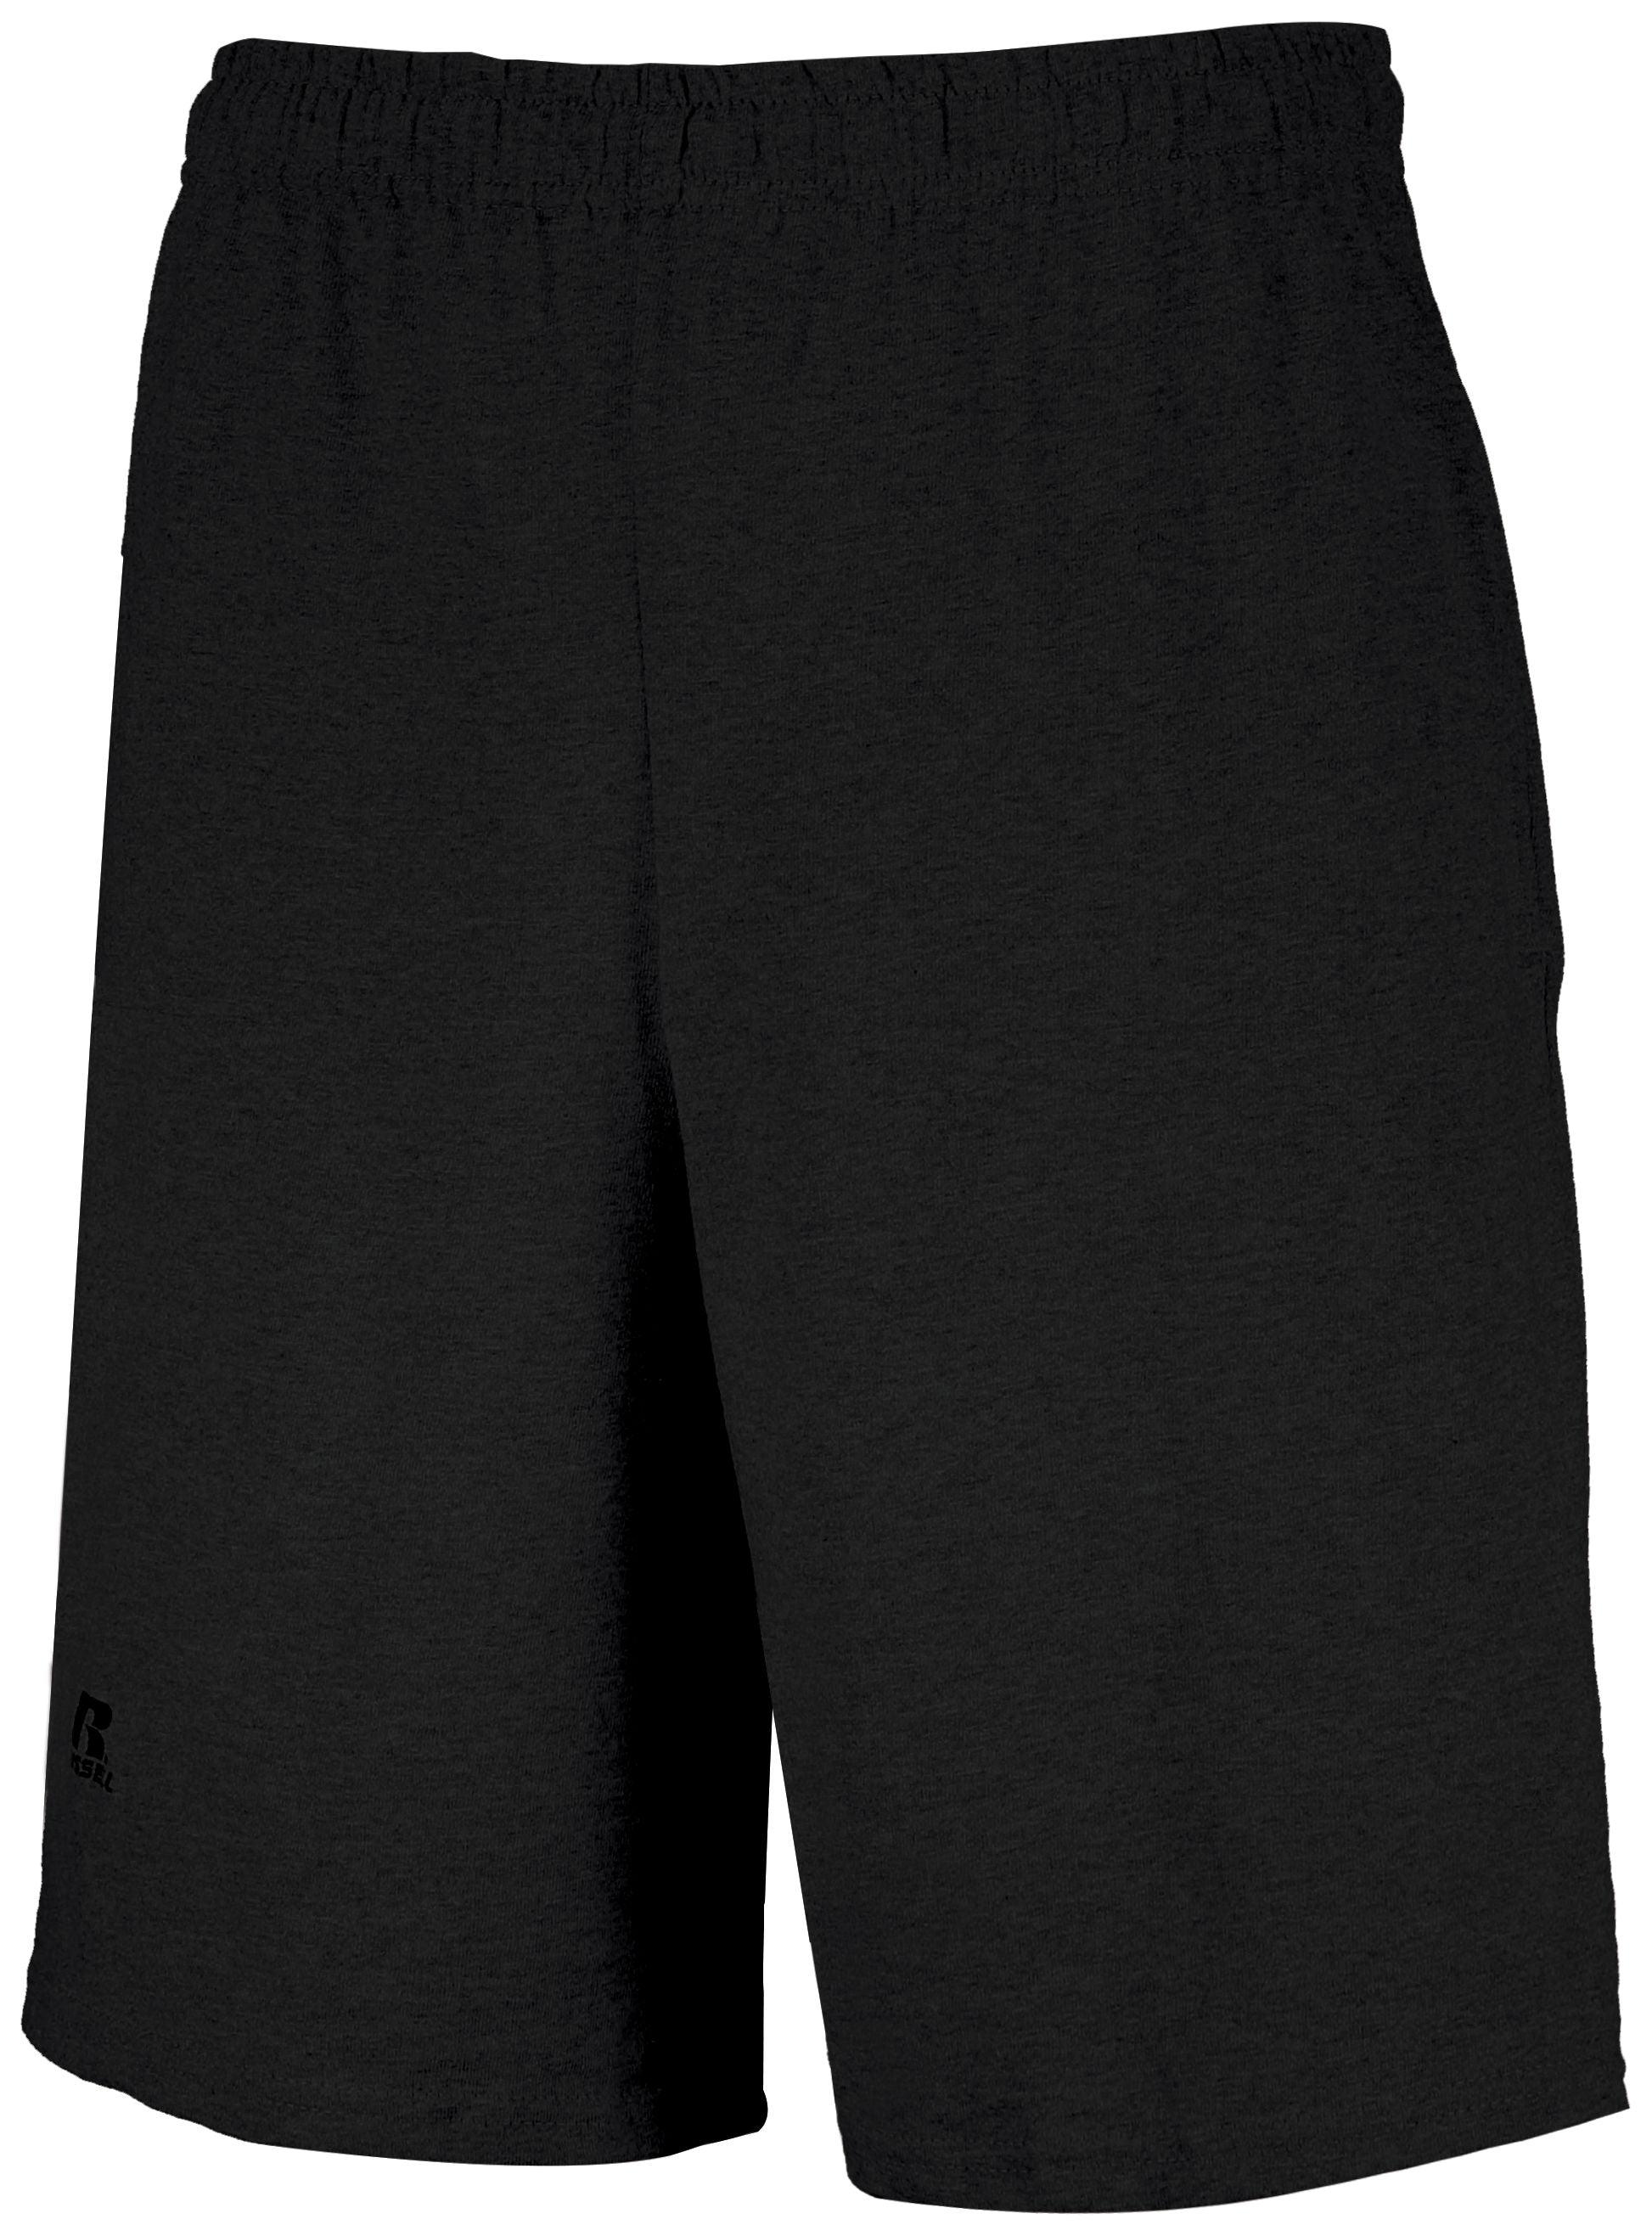 Basic Cotton Pocket Shorts - Dresses Max